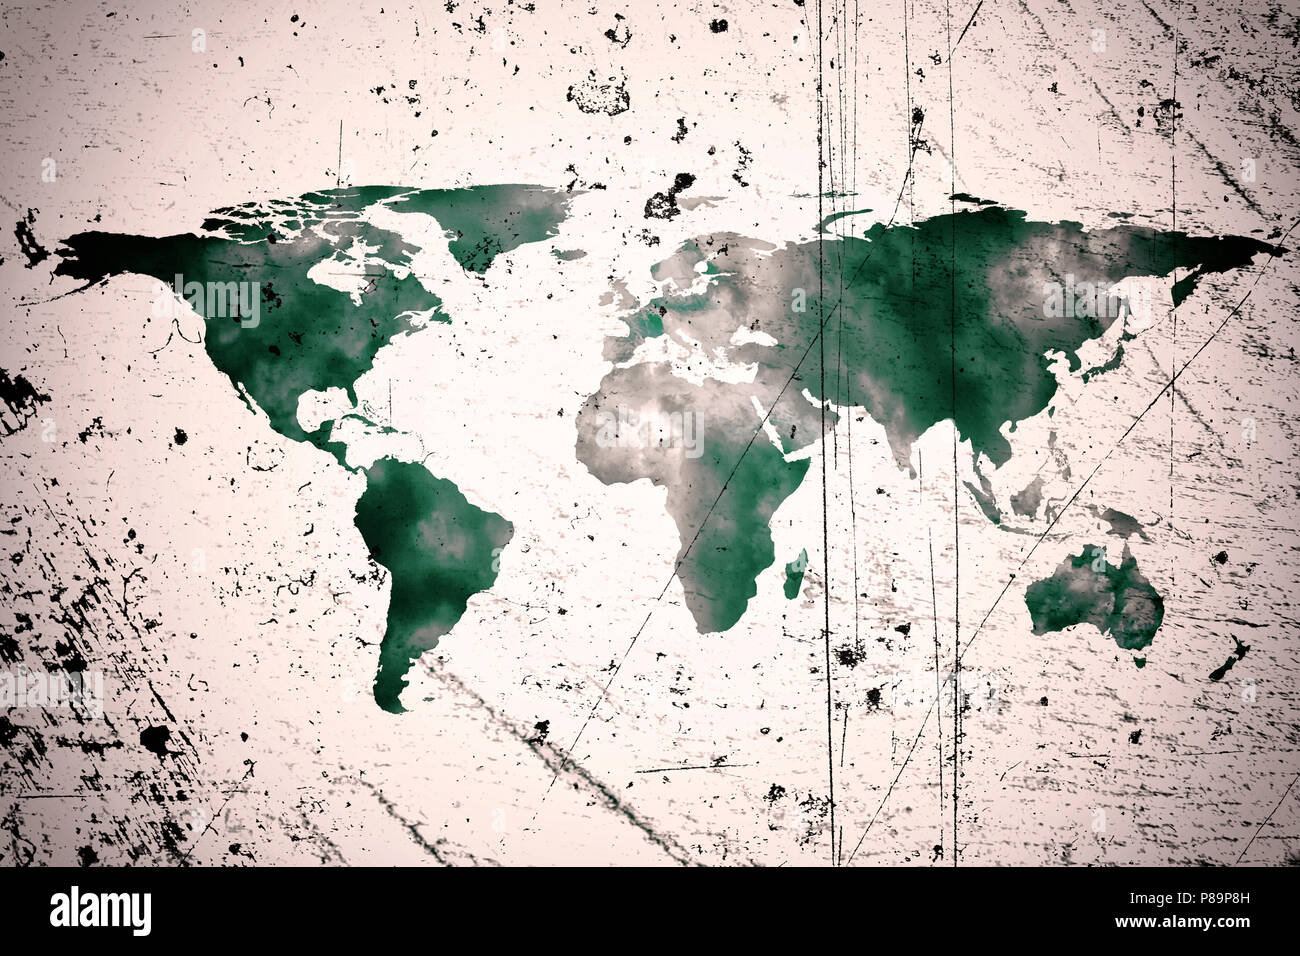 conceptual image of flat world map and smoke. NASA flat world map image used to furnish this image. Stock Photo